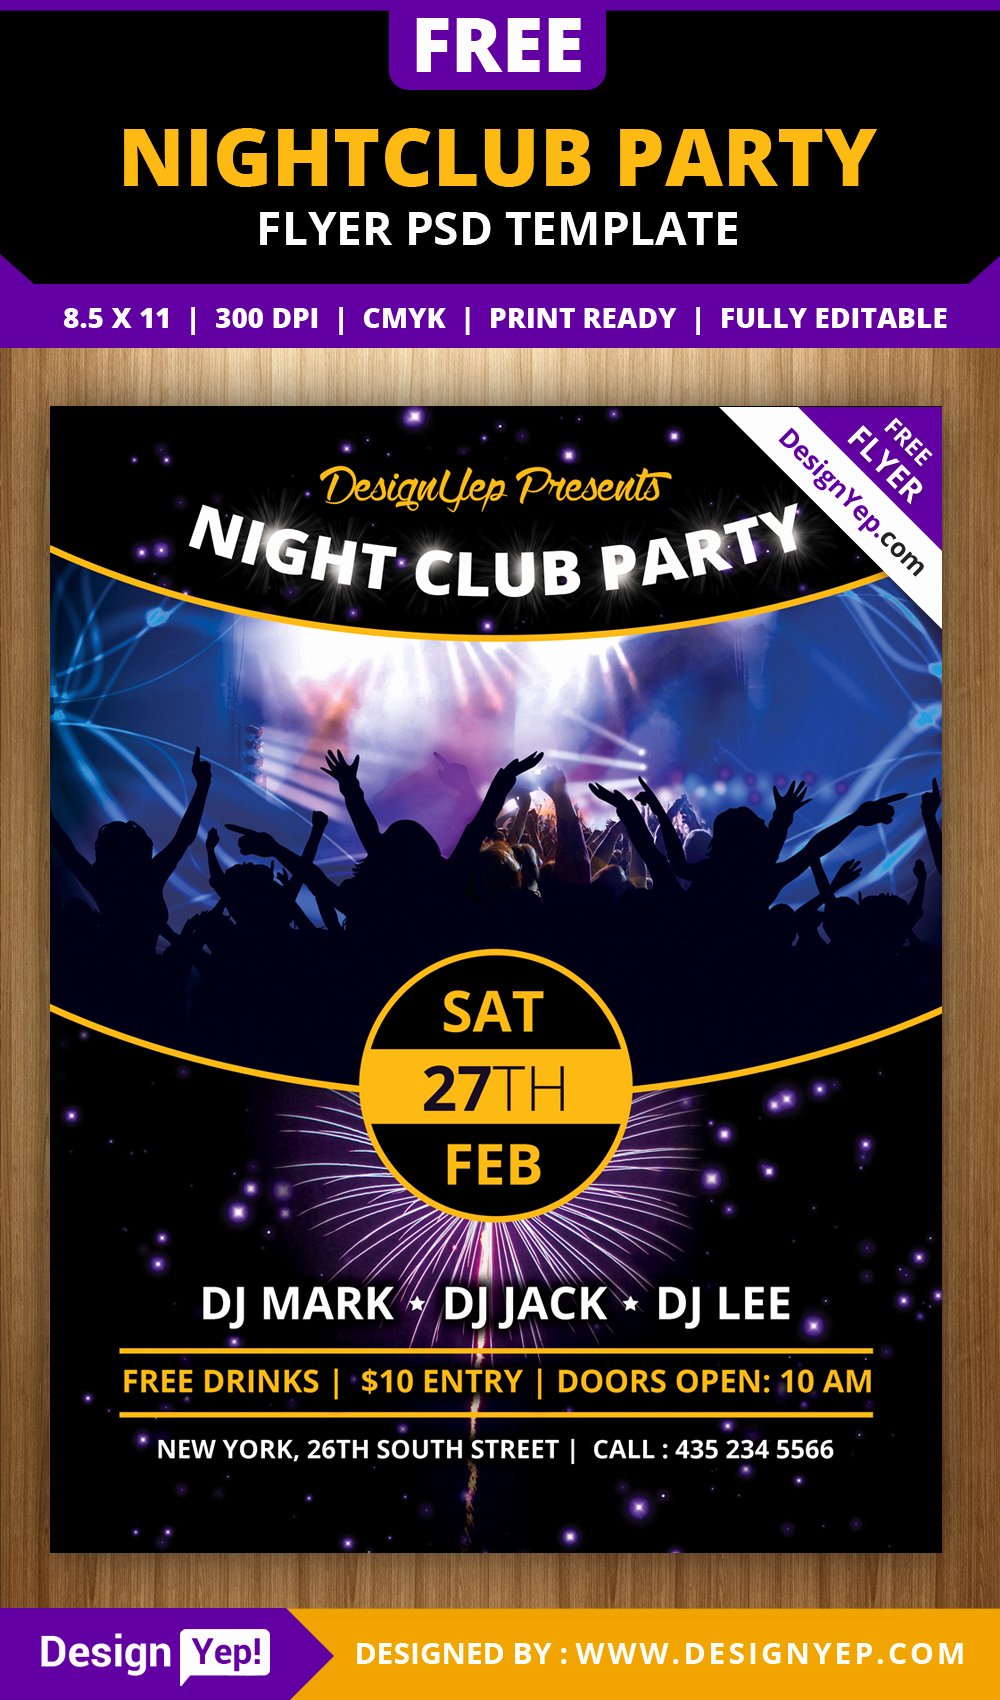 Free Nightclub Party Flyer Psd Template Designyep